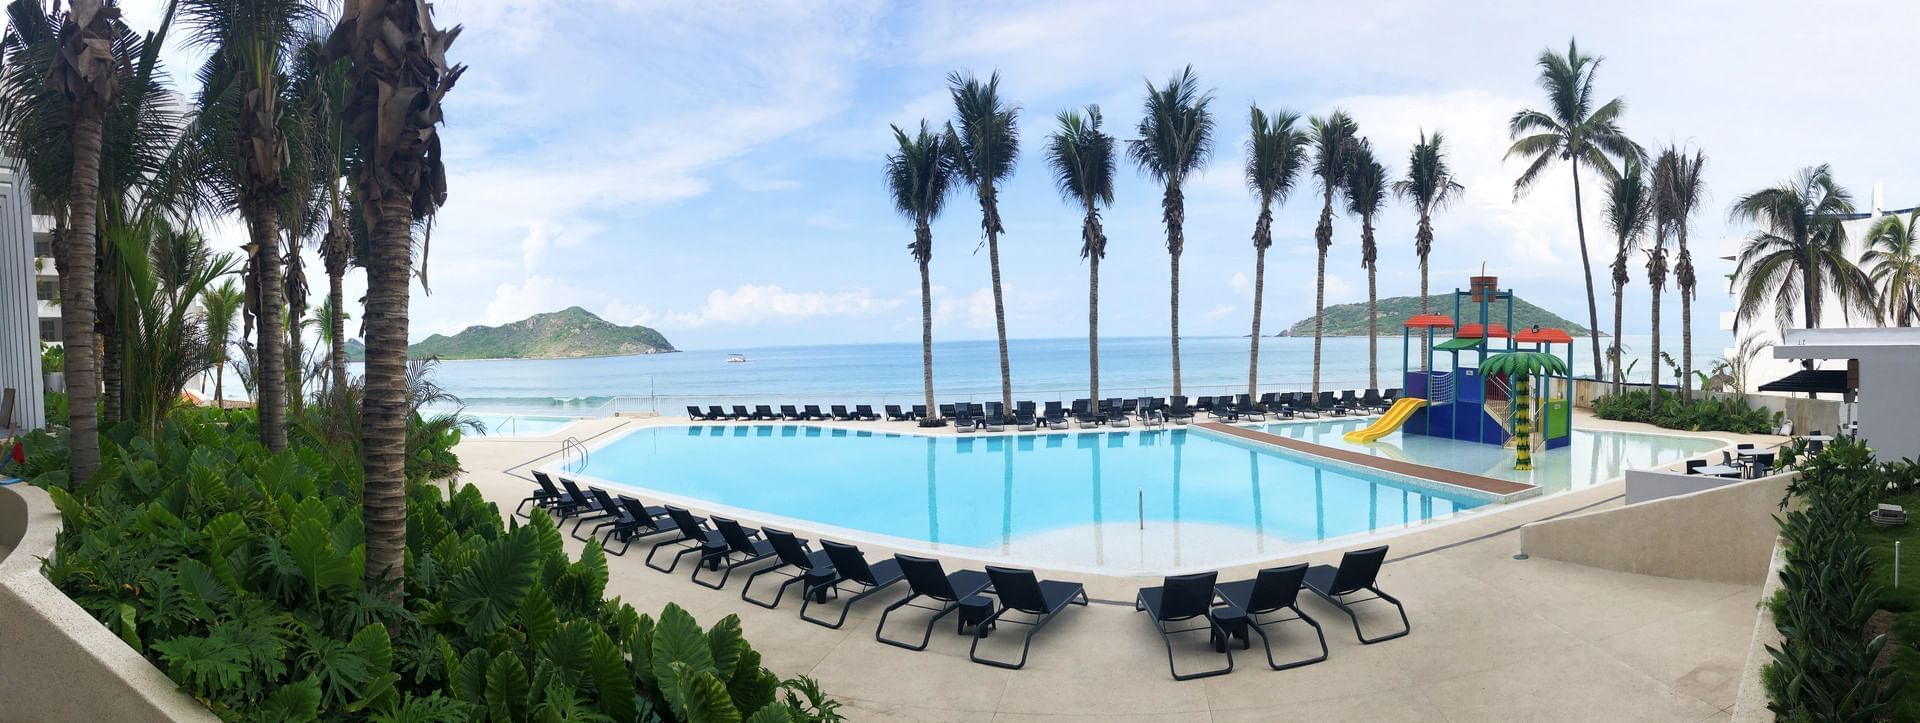 Sun lounges and slide near the pool at Viaggio Resort Mazatlan